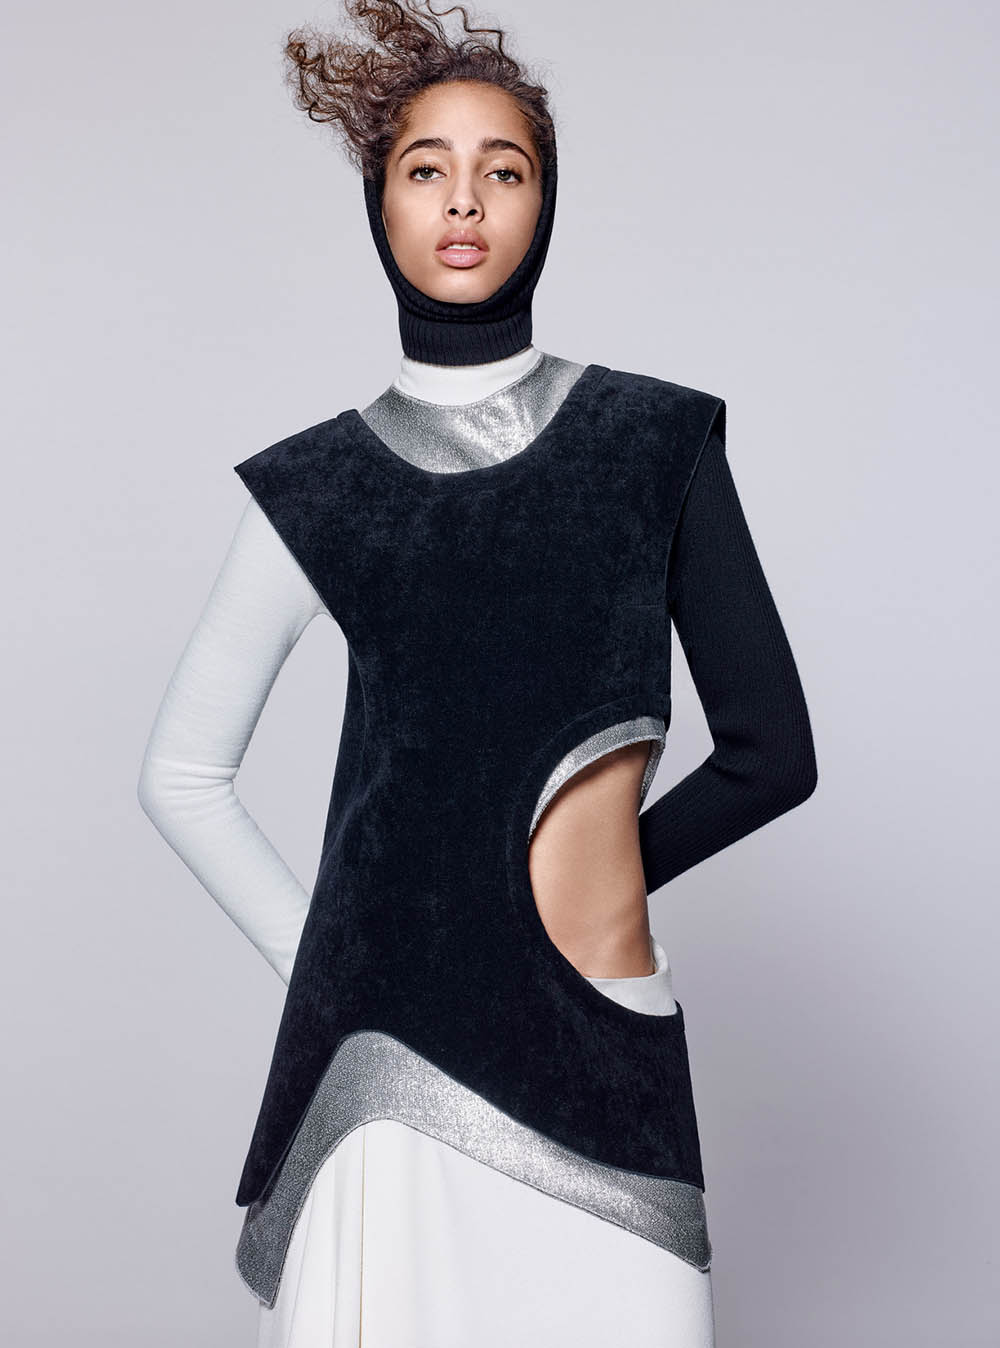 Yasmin Wijnaldum by Richard Burbridge for Vogue China November 2017